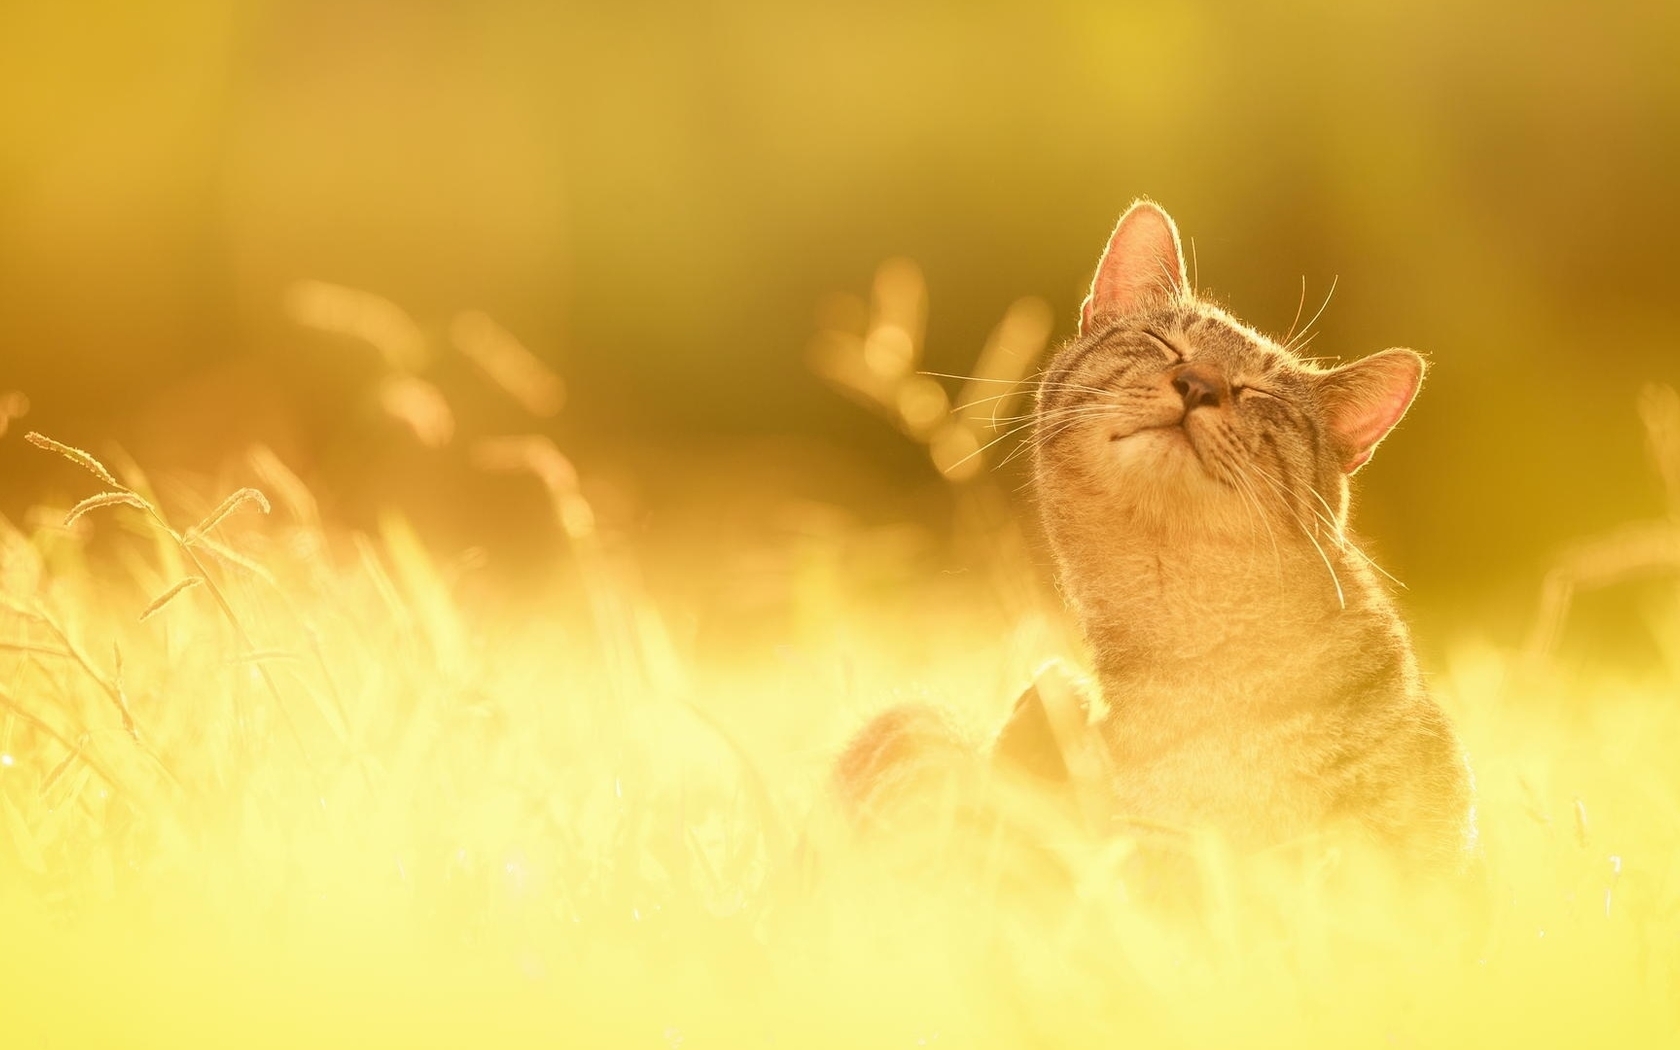 Image: Cat, snout, hiding, sun, ears, blurred background